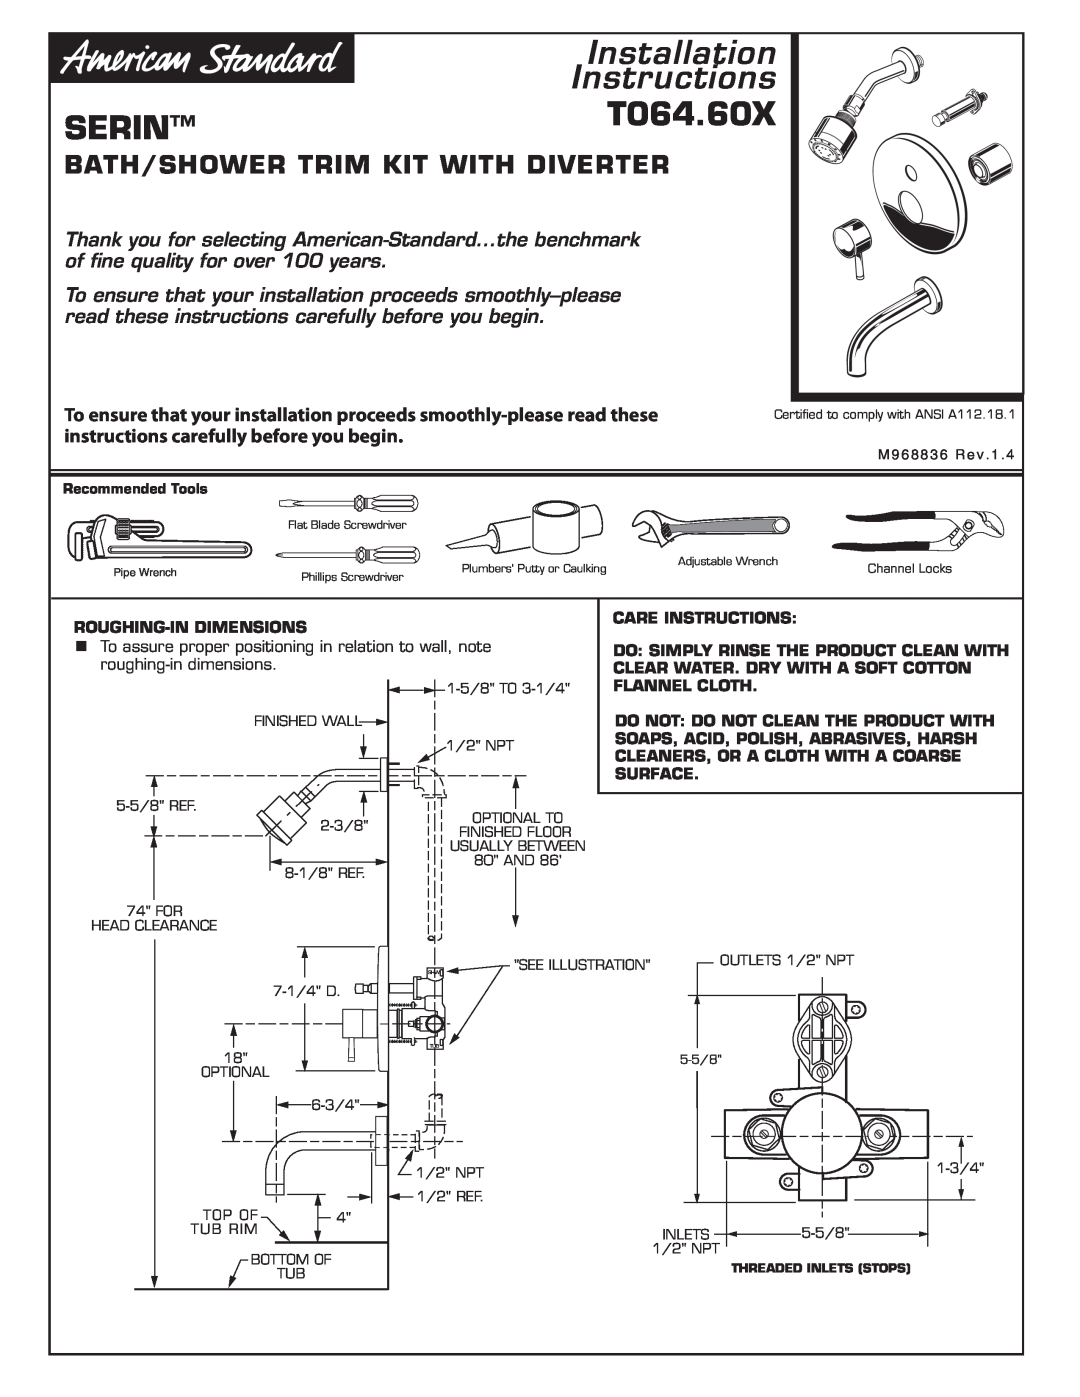 American Standard installation instructions SERINT064.60X, Installation Instructions 